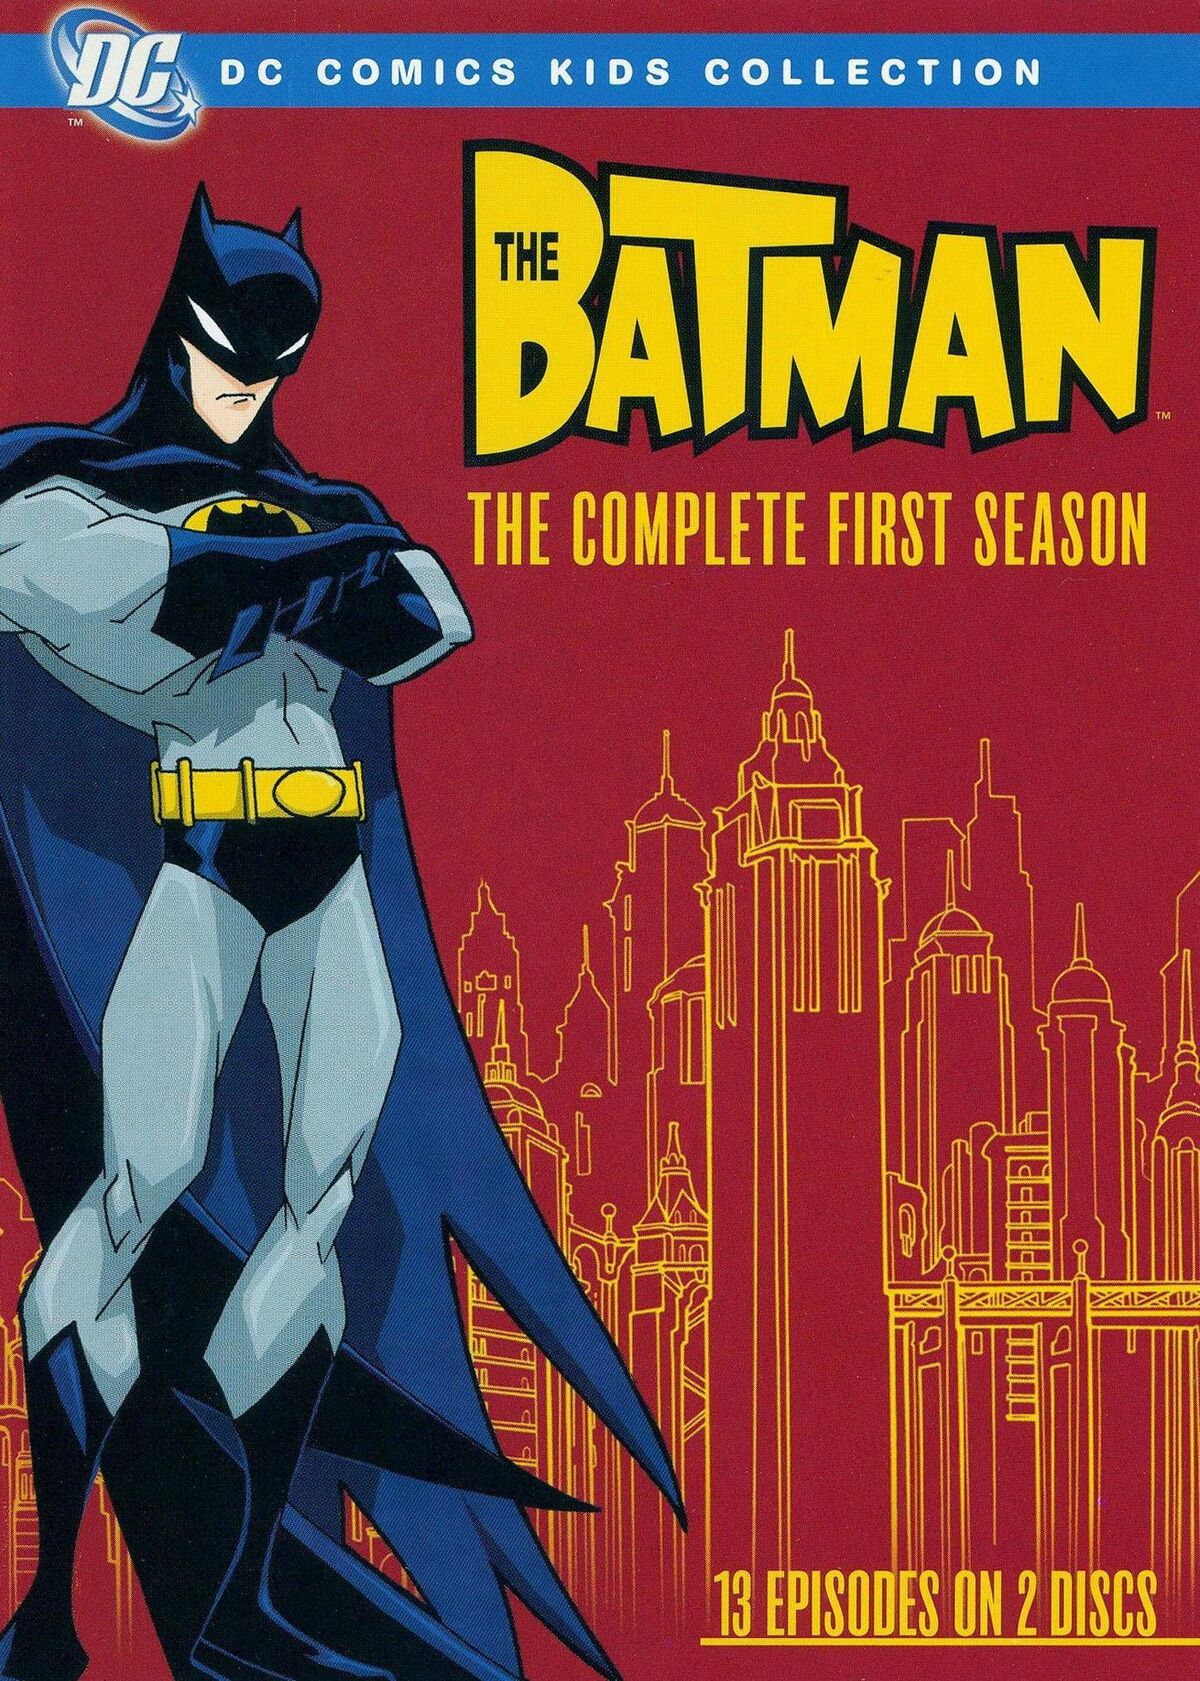 The Batman | Anime And Cartoon Extreme Wiki | Fandom